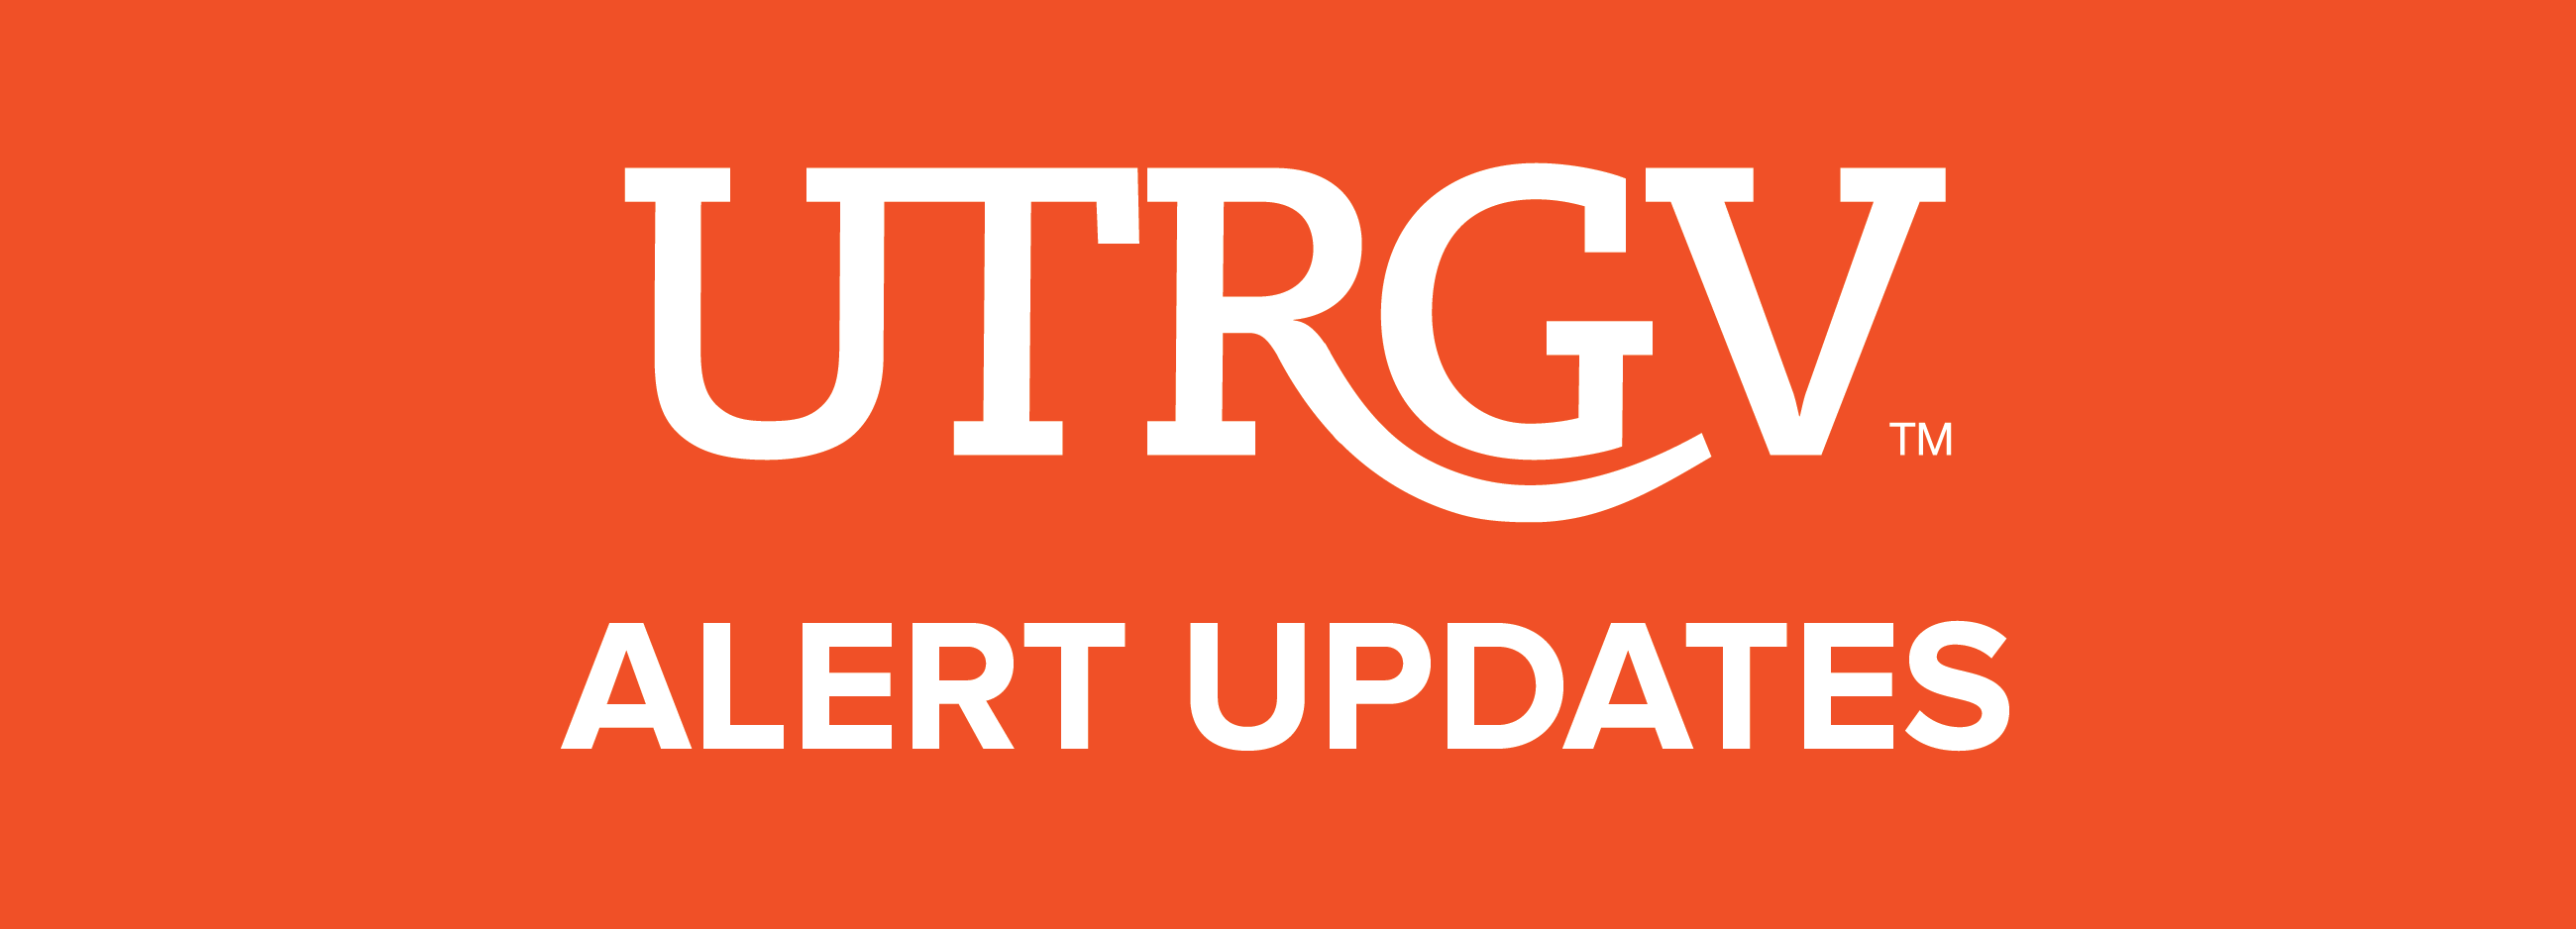 UTRGV Alert Updates